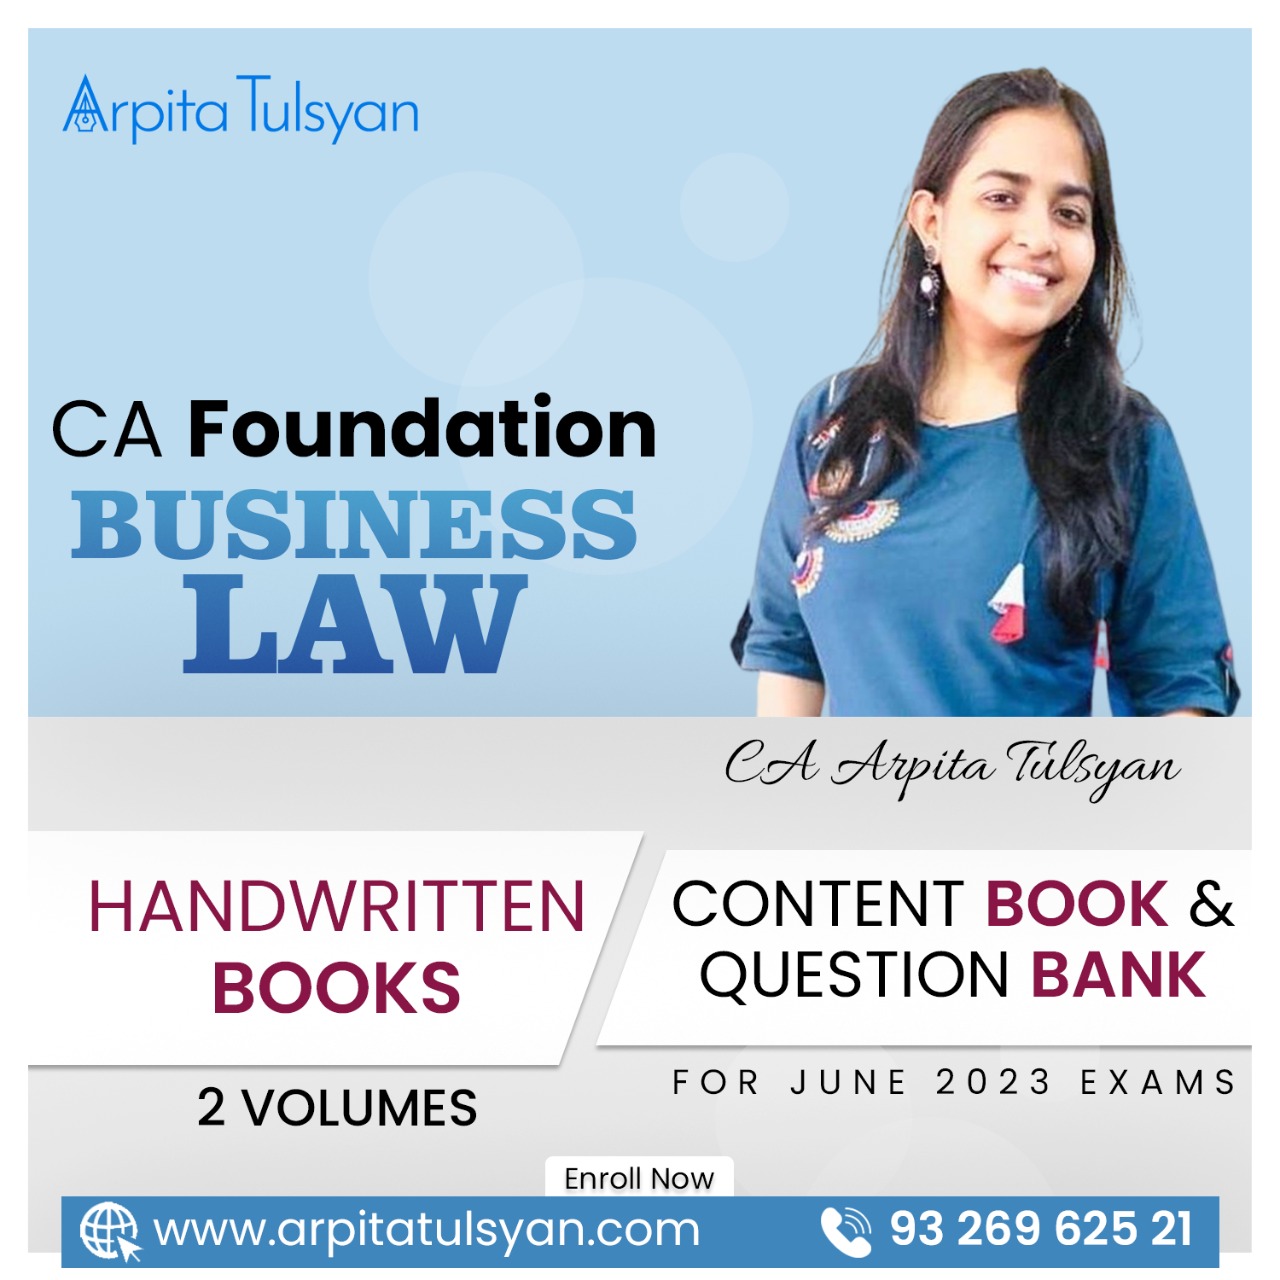 ca foundation law case study book pdf